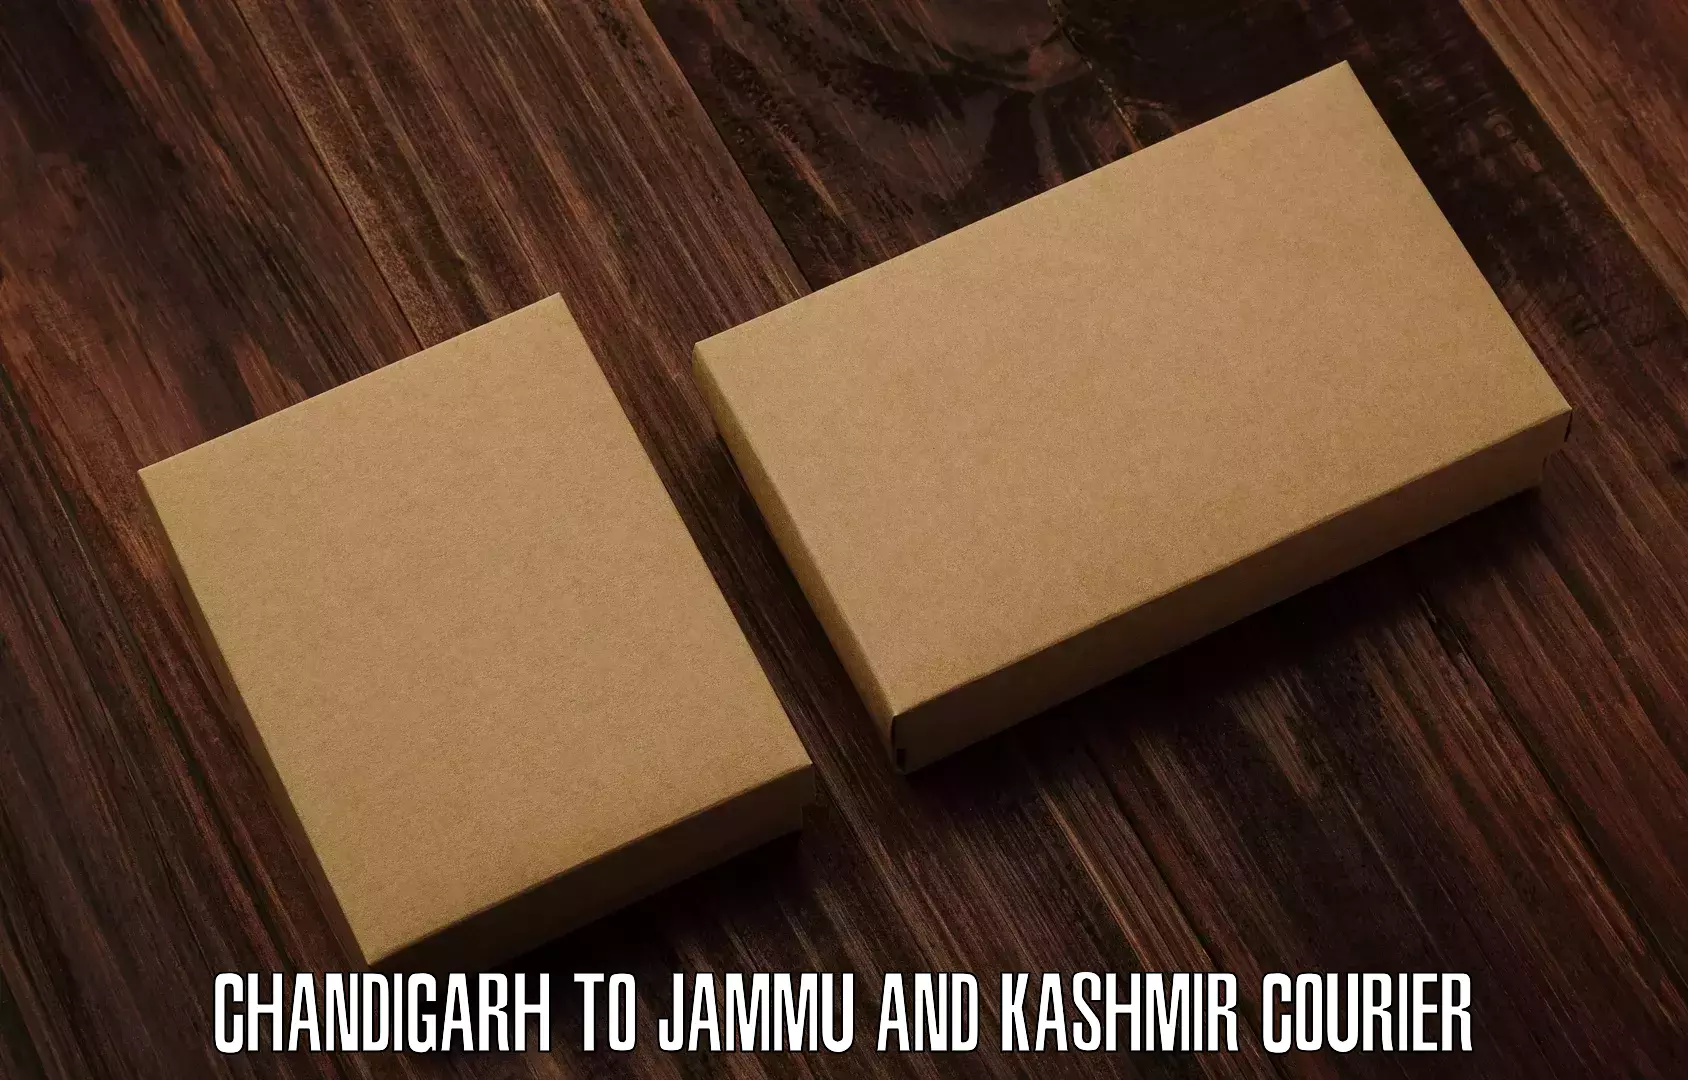 User-friendly courier app Chandigarh to Jammu